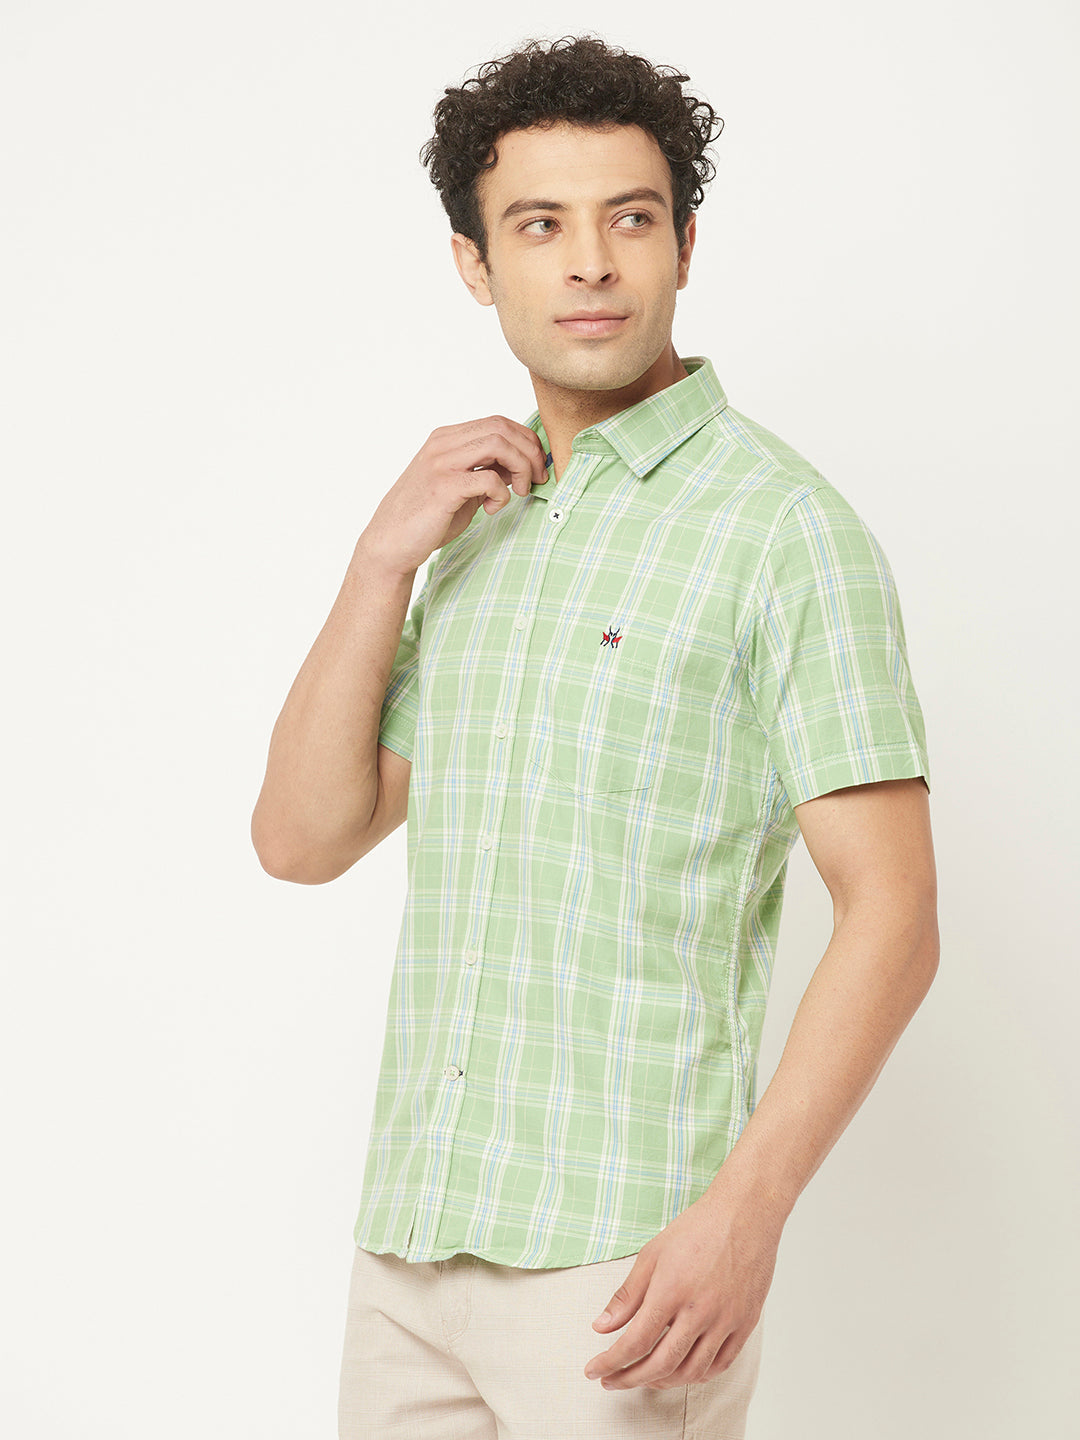   Short-Sleeved Green Shirt in Checks